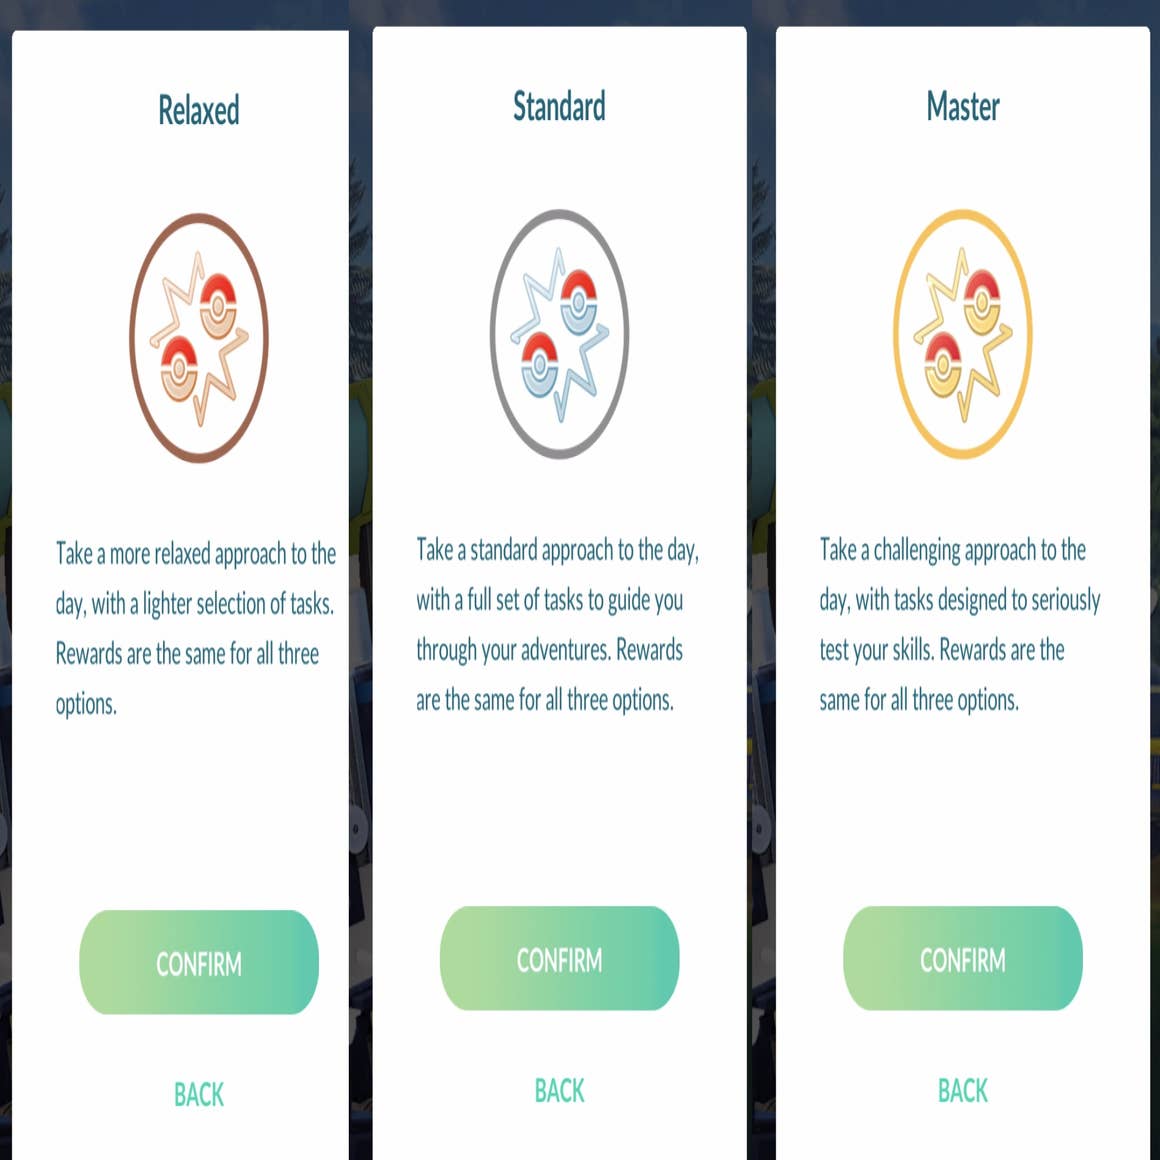 Pokémon Go Fest Shaymin Special Research Tasks and rewards - Polygon